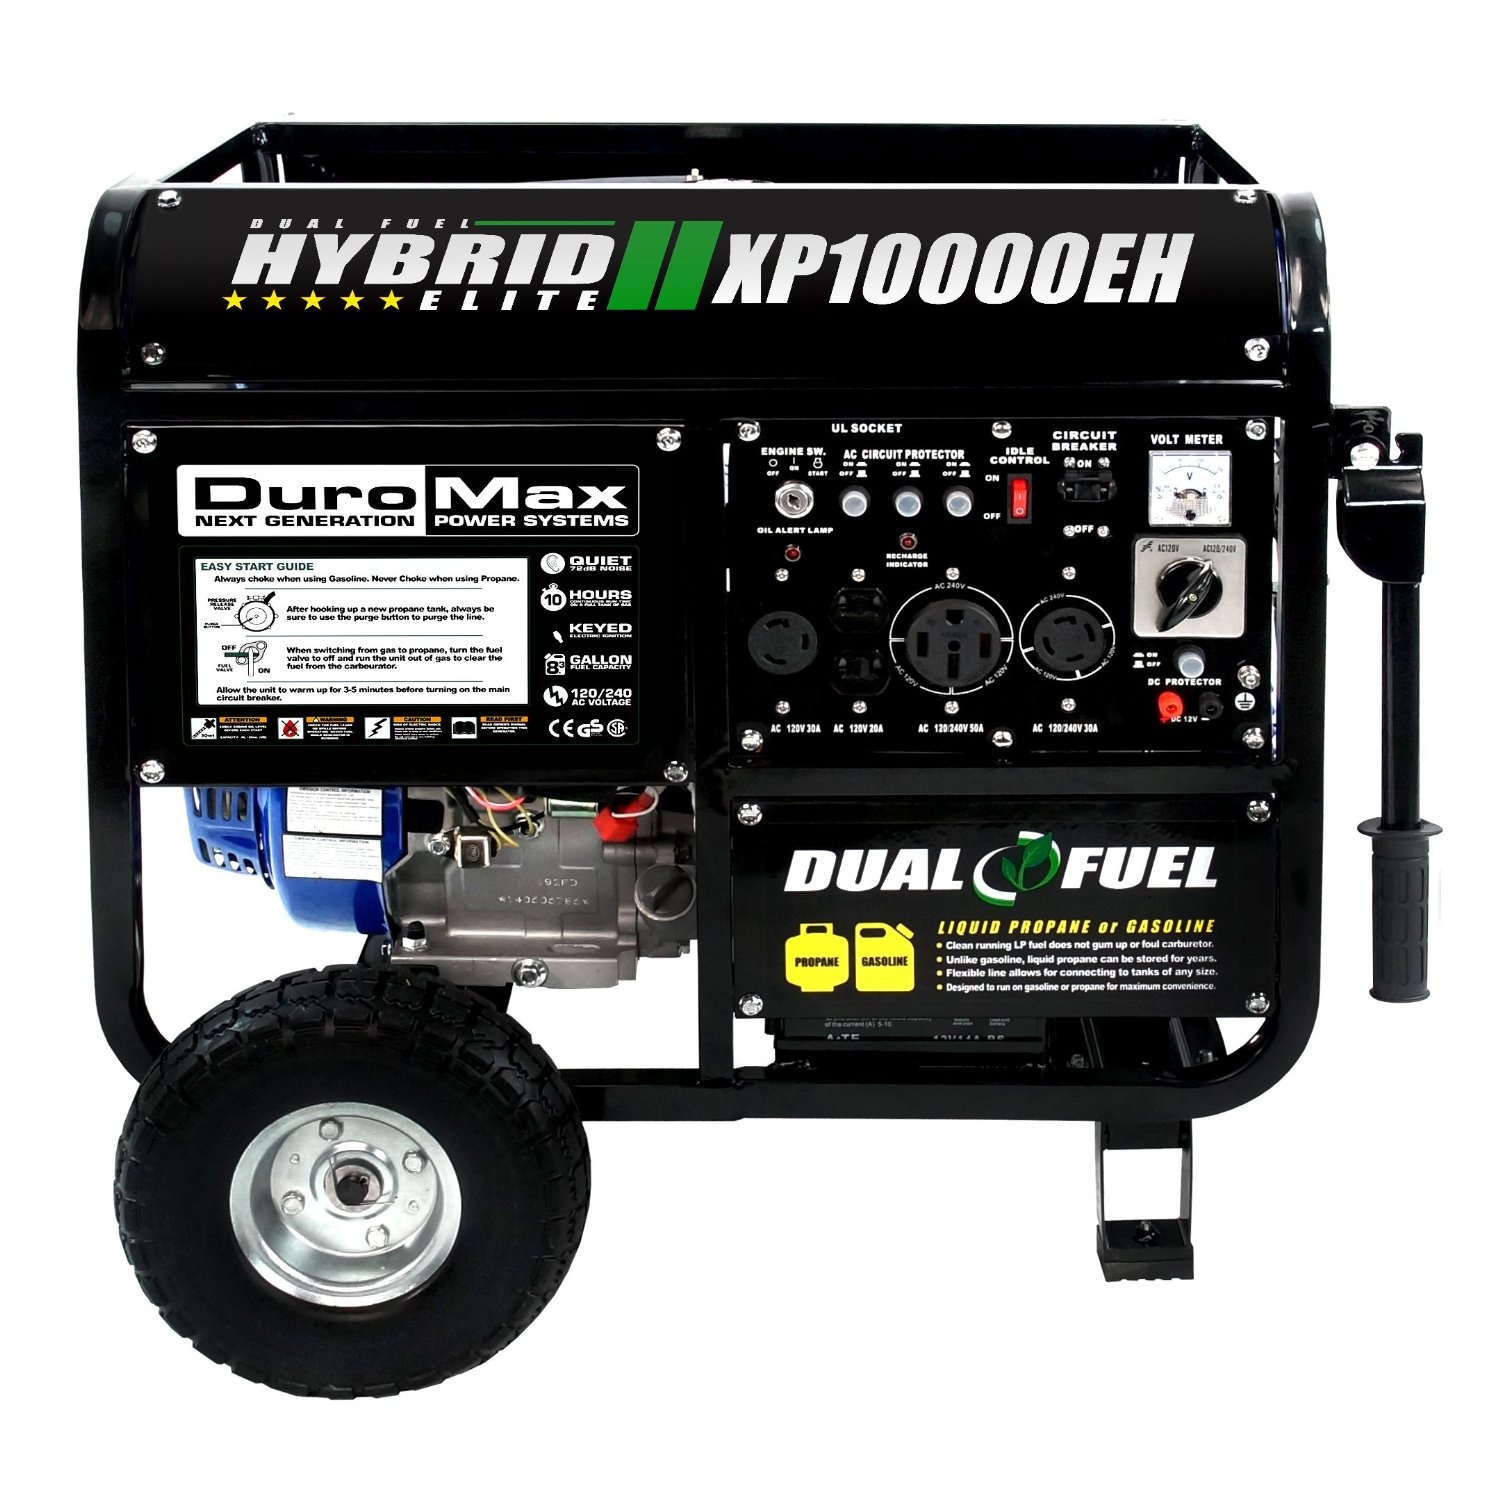 DuroMax Hybrid Dual Fuel Portable Gas Propane Generator Review